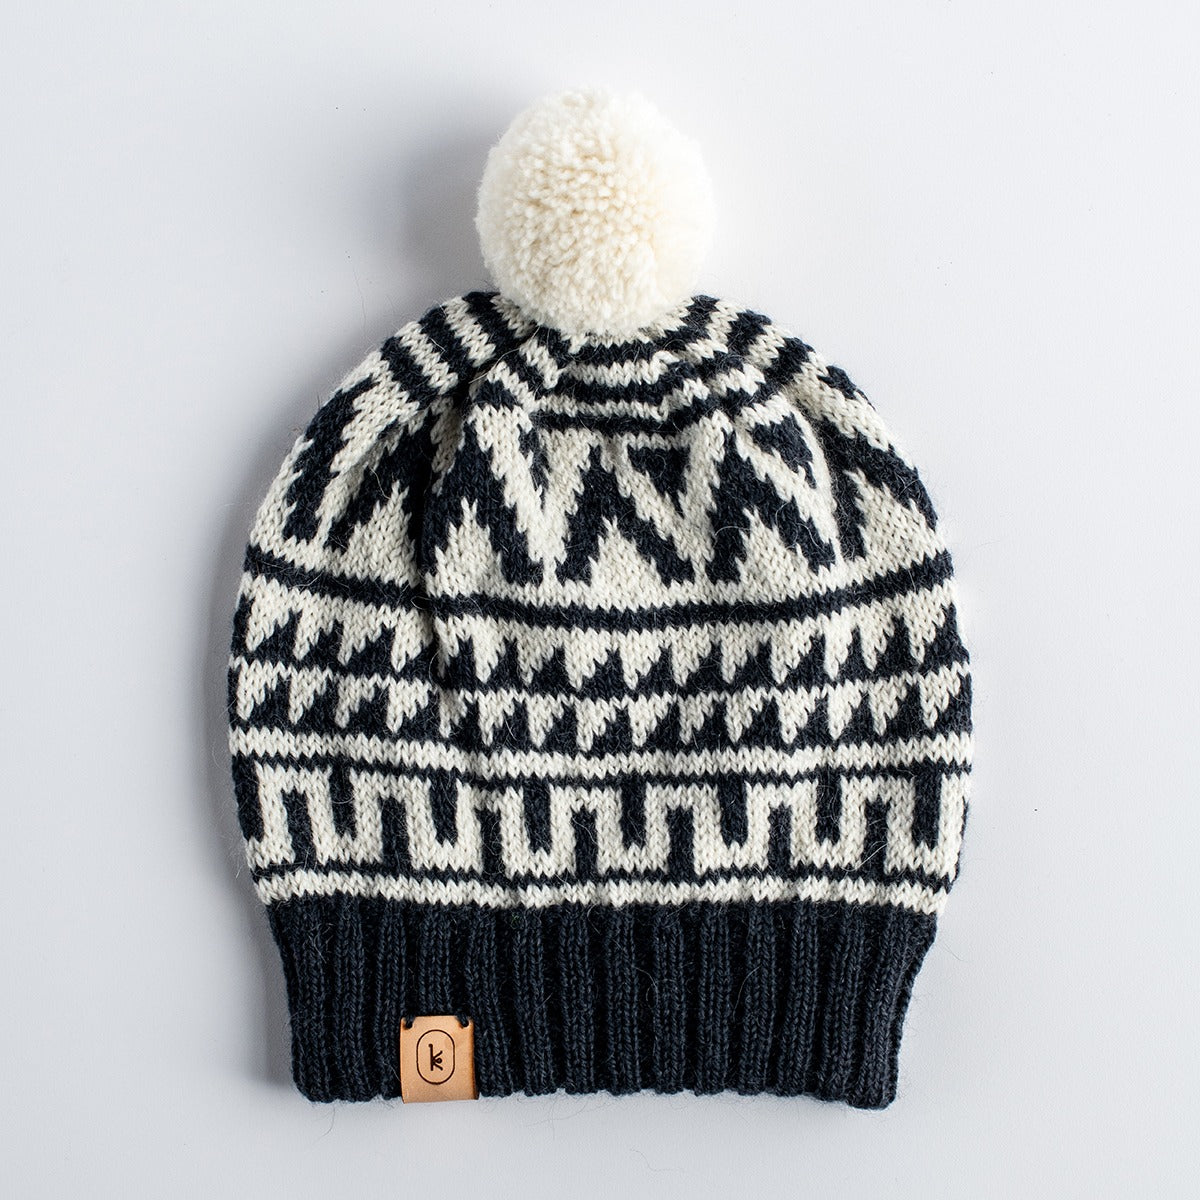 Snowdrop Hat by Kate Gagnon Osborn in Kelbourne Woolens Andorra